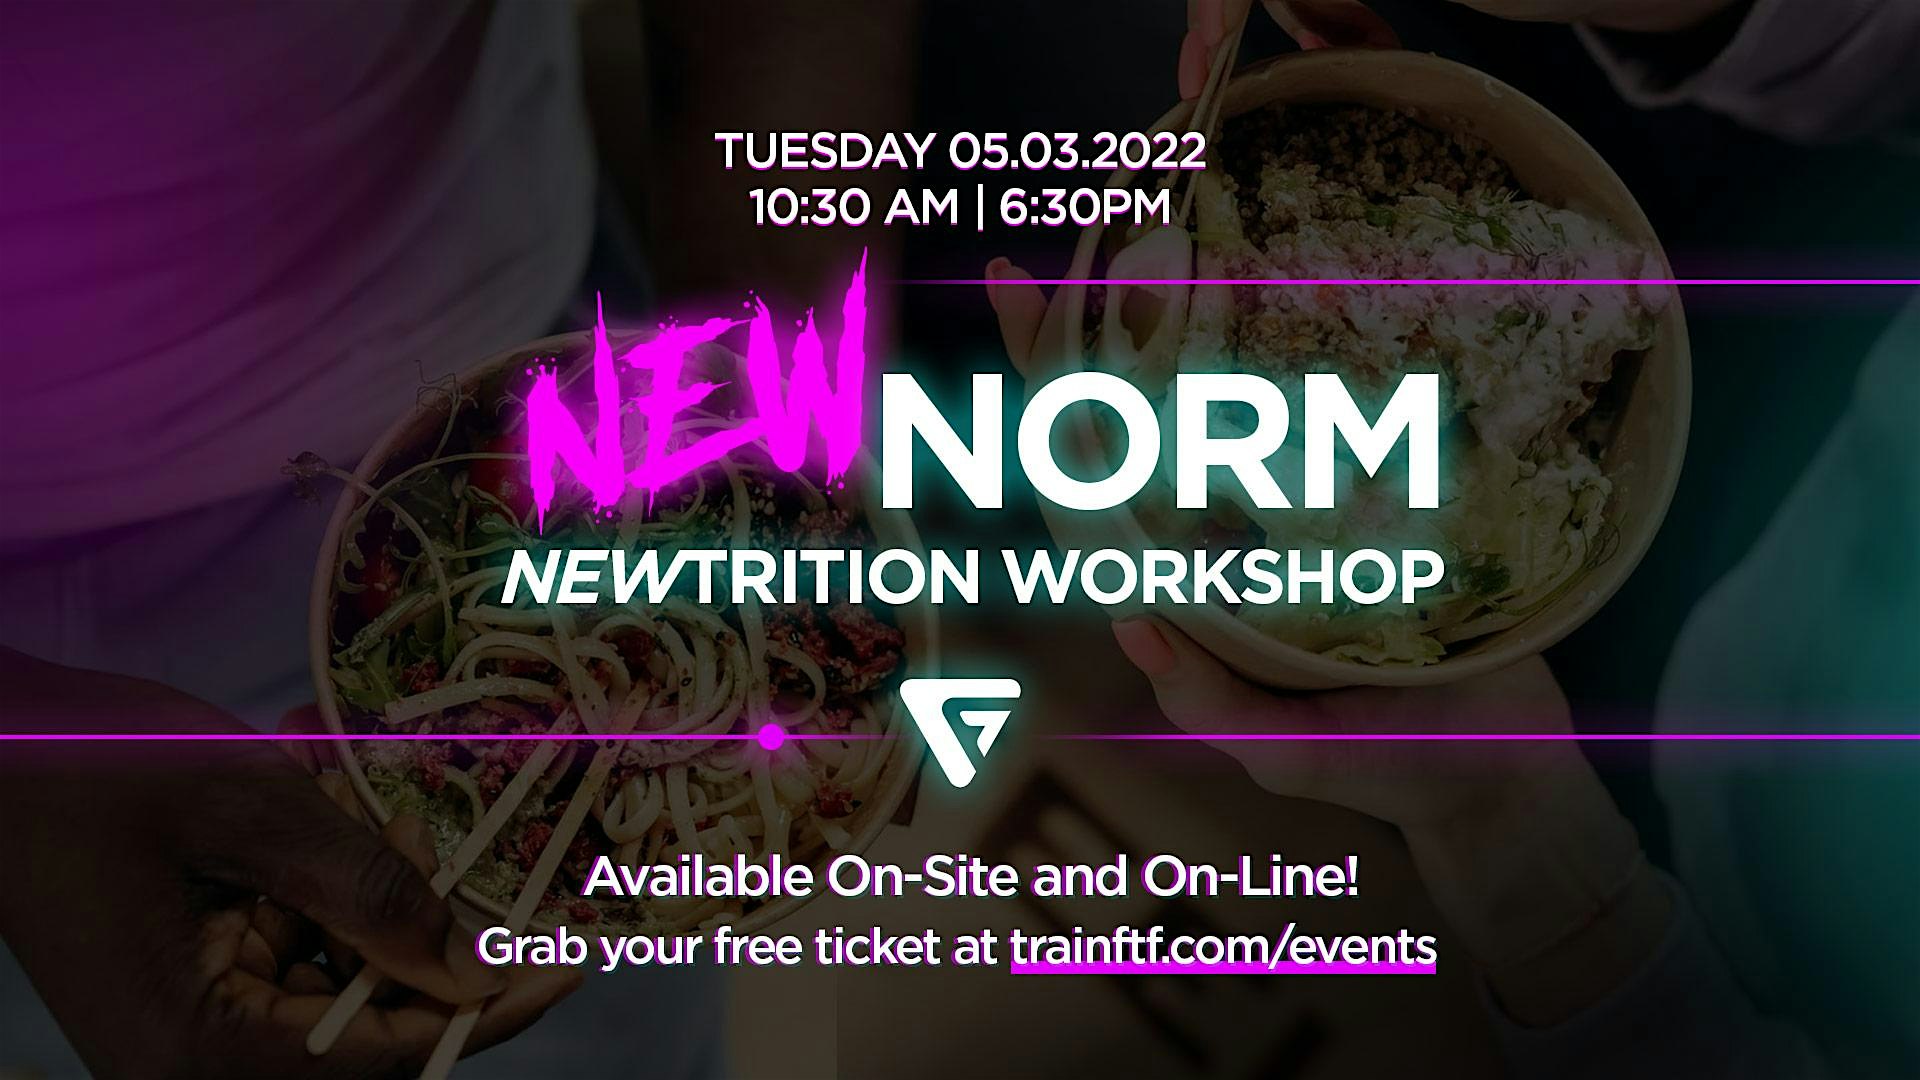 New Norm Newtrition Workshop: Evening